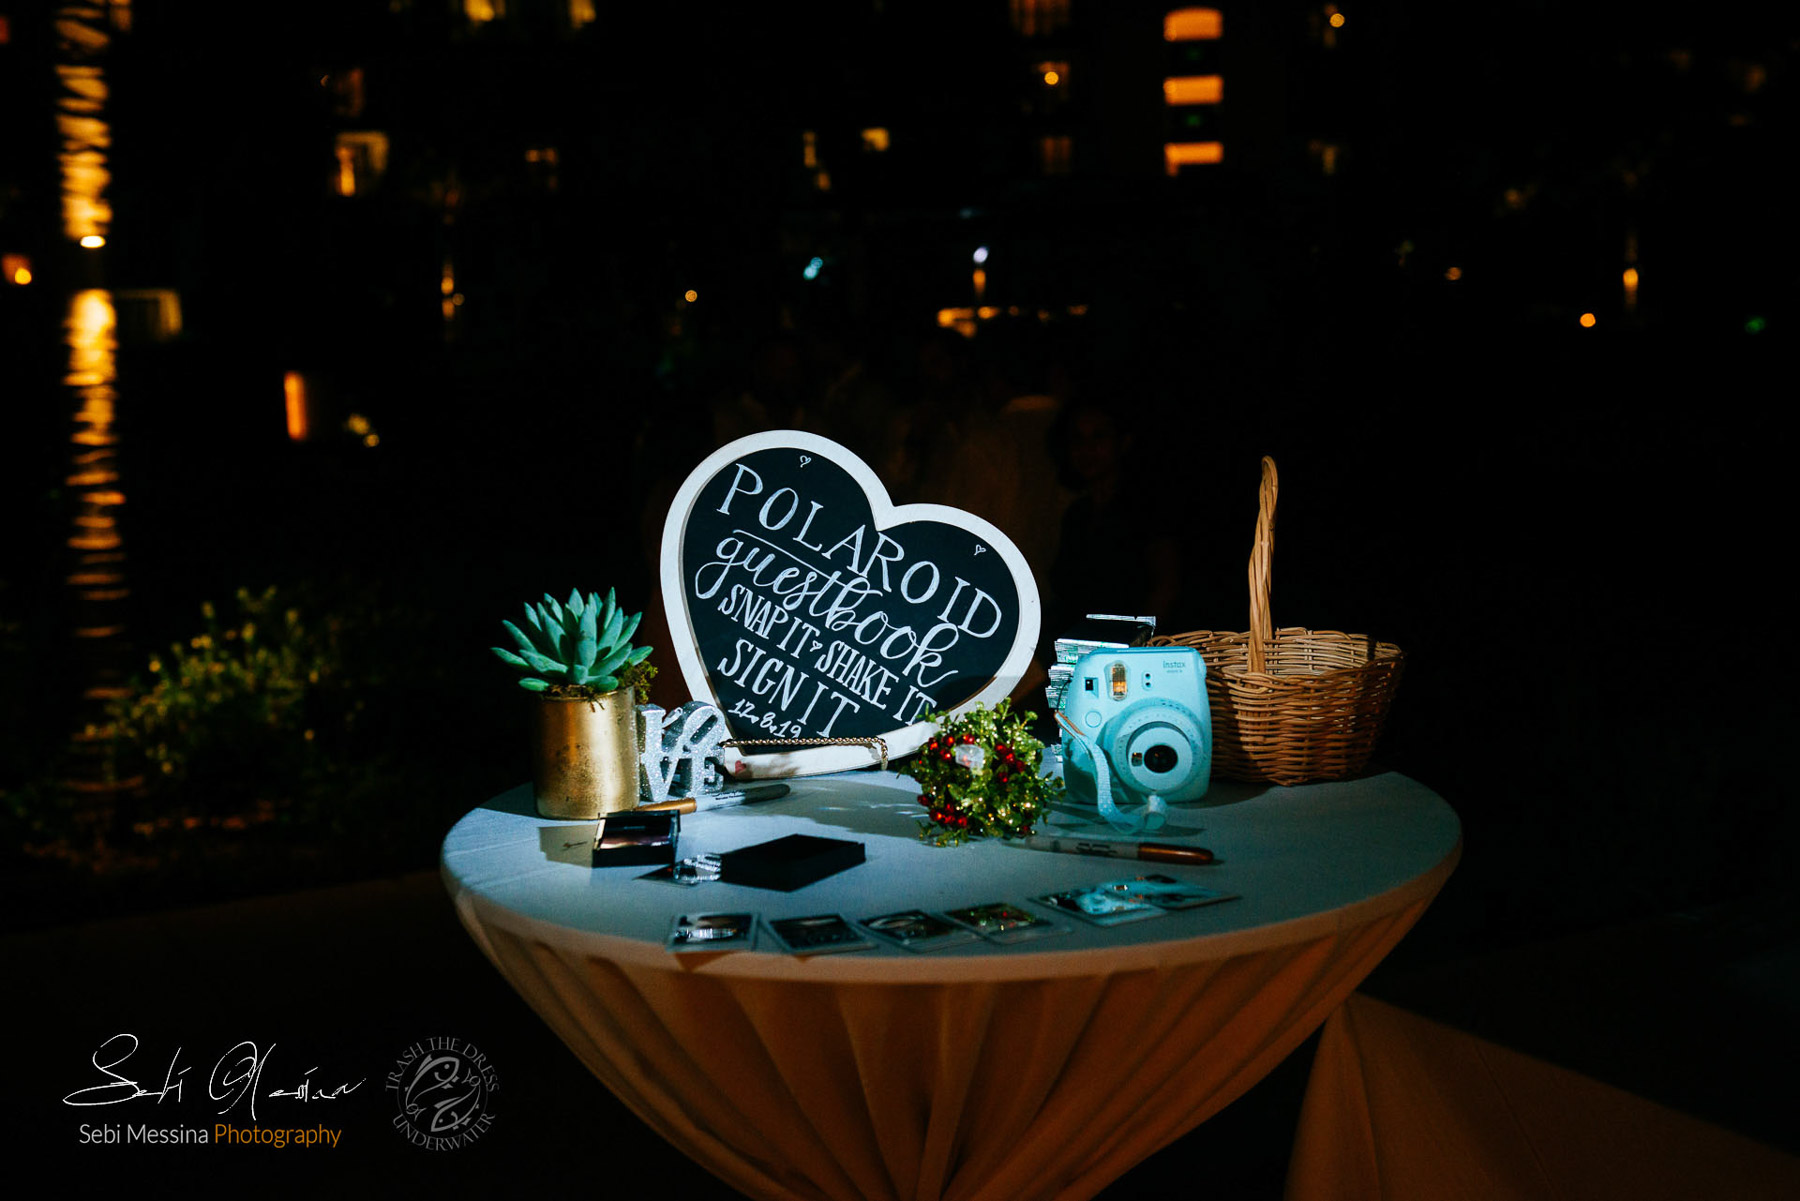 Reception and first dance – Wedding Unico 20 87 – Sebi Messina Photography